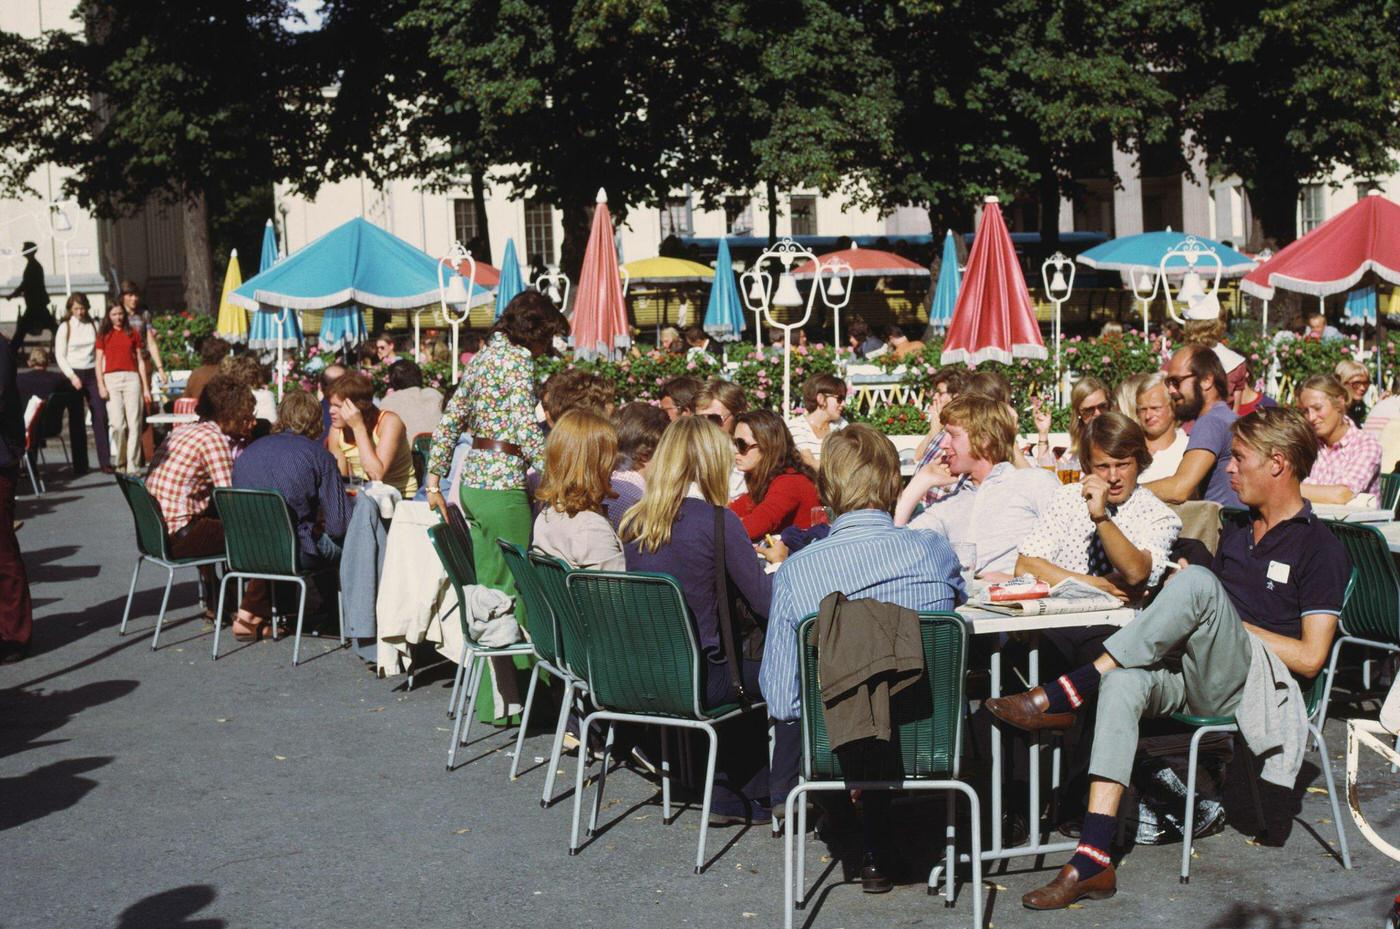 Outdoor cafe in Hamburg, Germany, circa 1970.